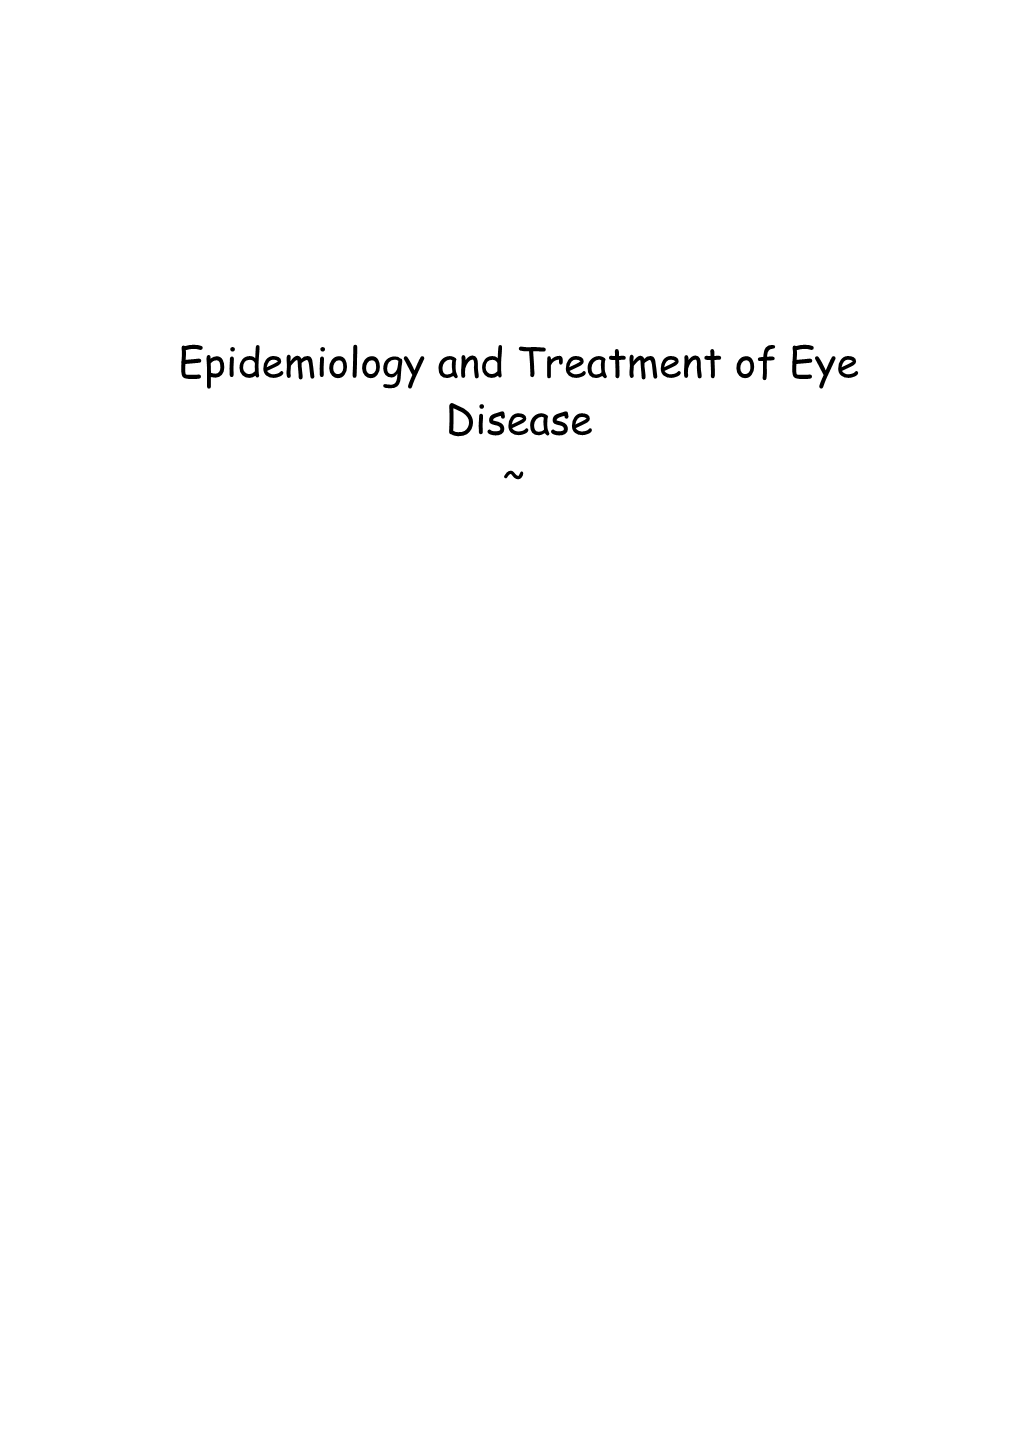 Epidemiology and Treatment of Eye Disease